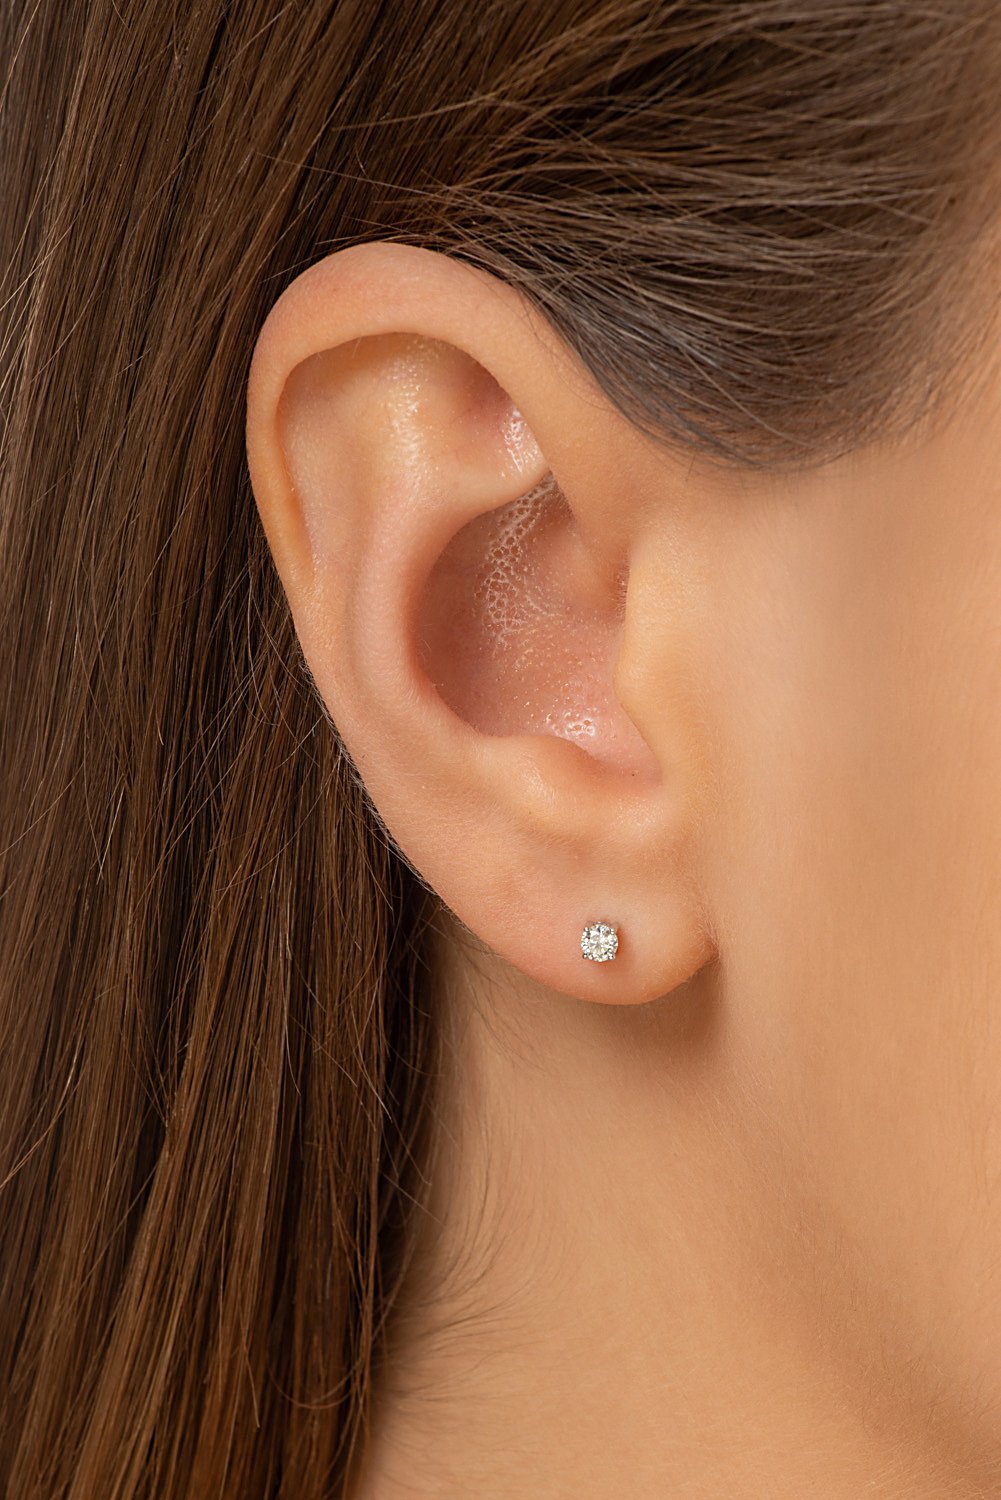 Diamond Earrings. Diamond Studs. Solitaire diamond earrings. White Gold earrings